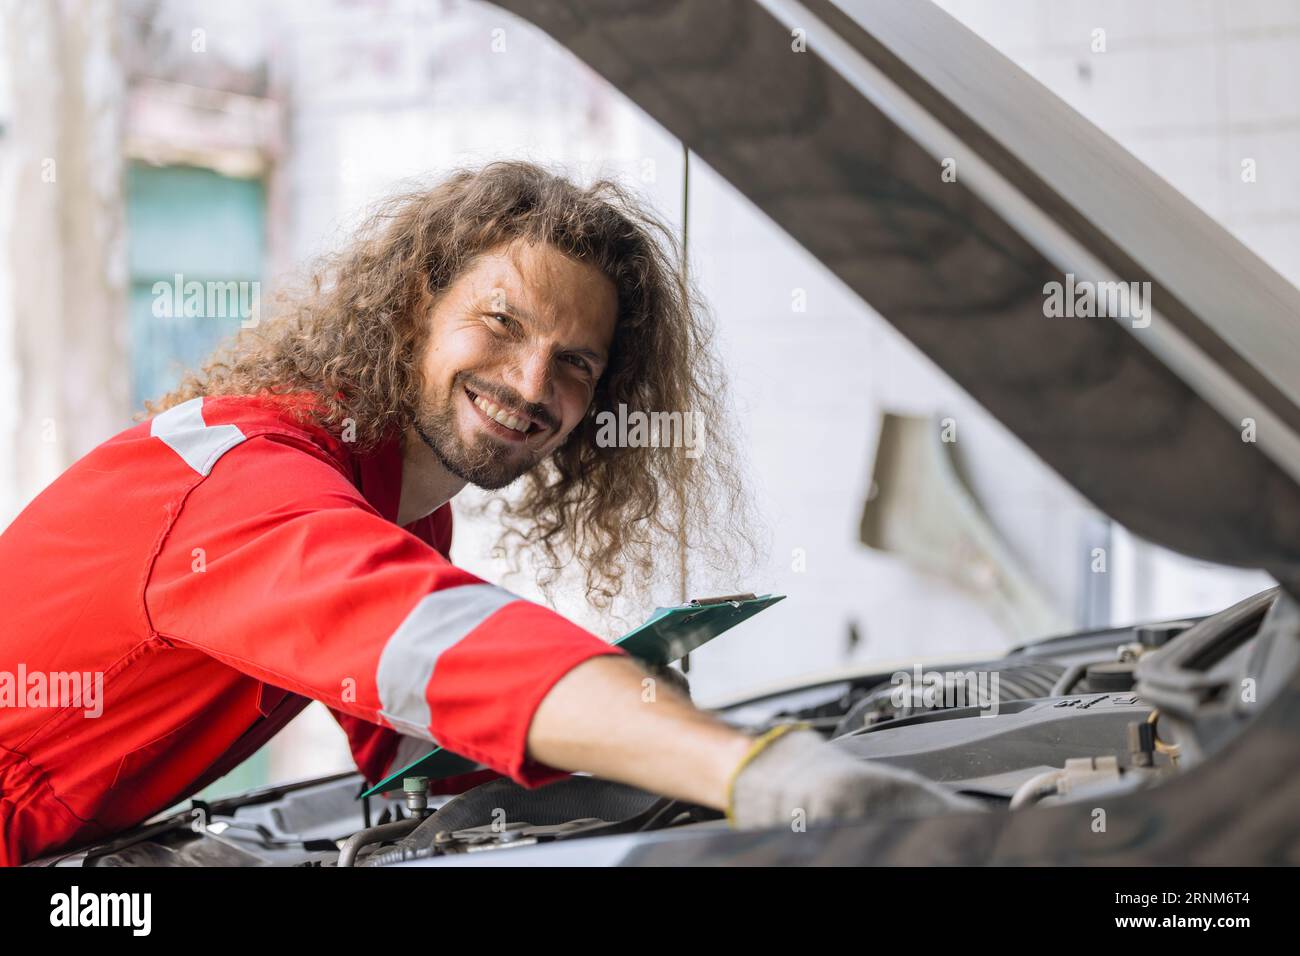 portrait happy garage mechanic male worker working fix service maintenance auto vehicle engine Stock Photo